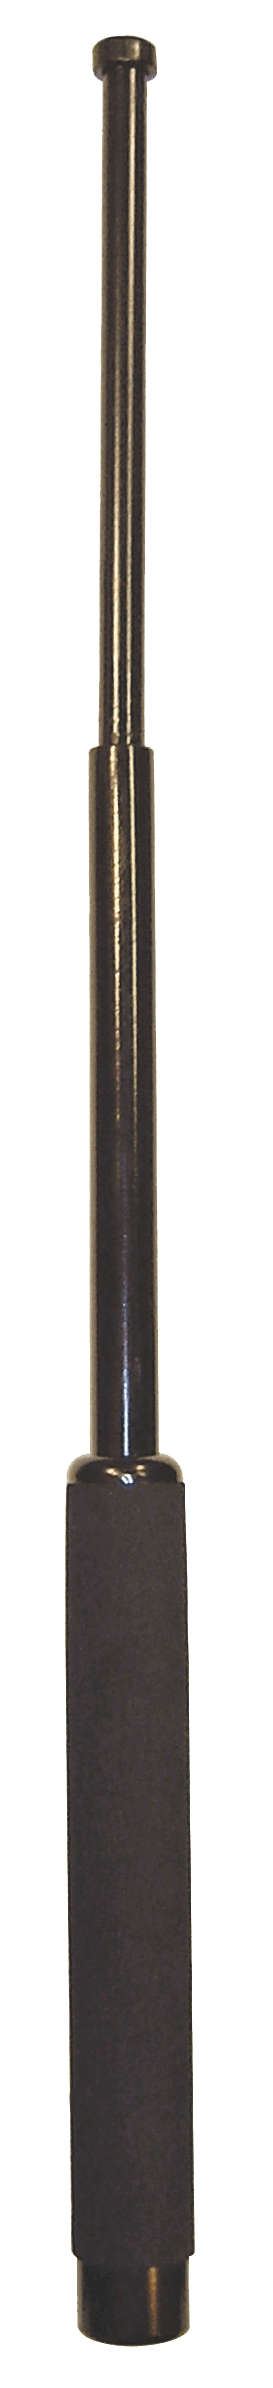 PSP NS16R Expandable Expandable Baton 16″ 1.5 lbs Black Rubber Handle